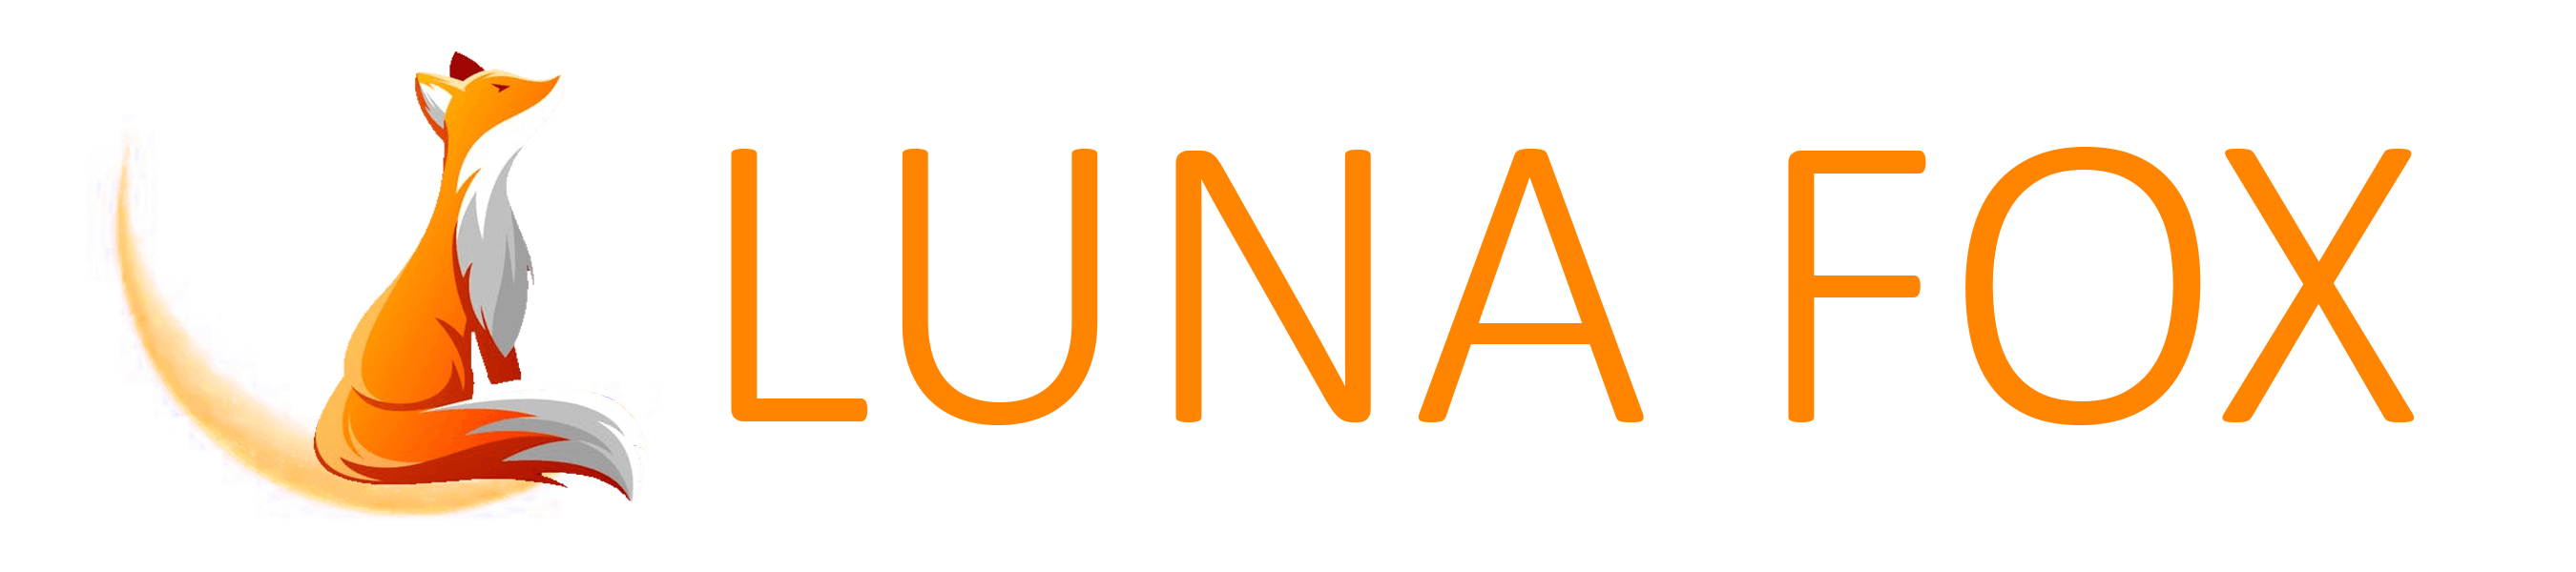 luna-fox-logo